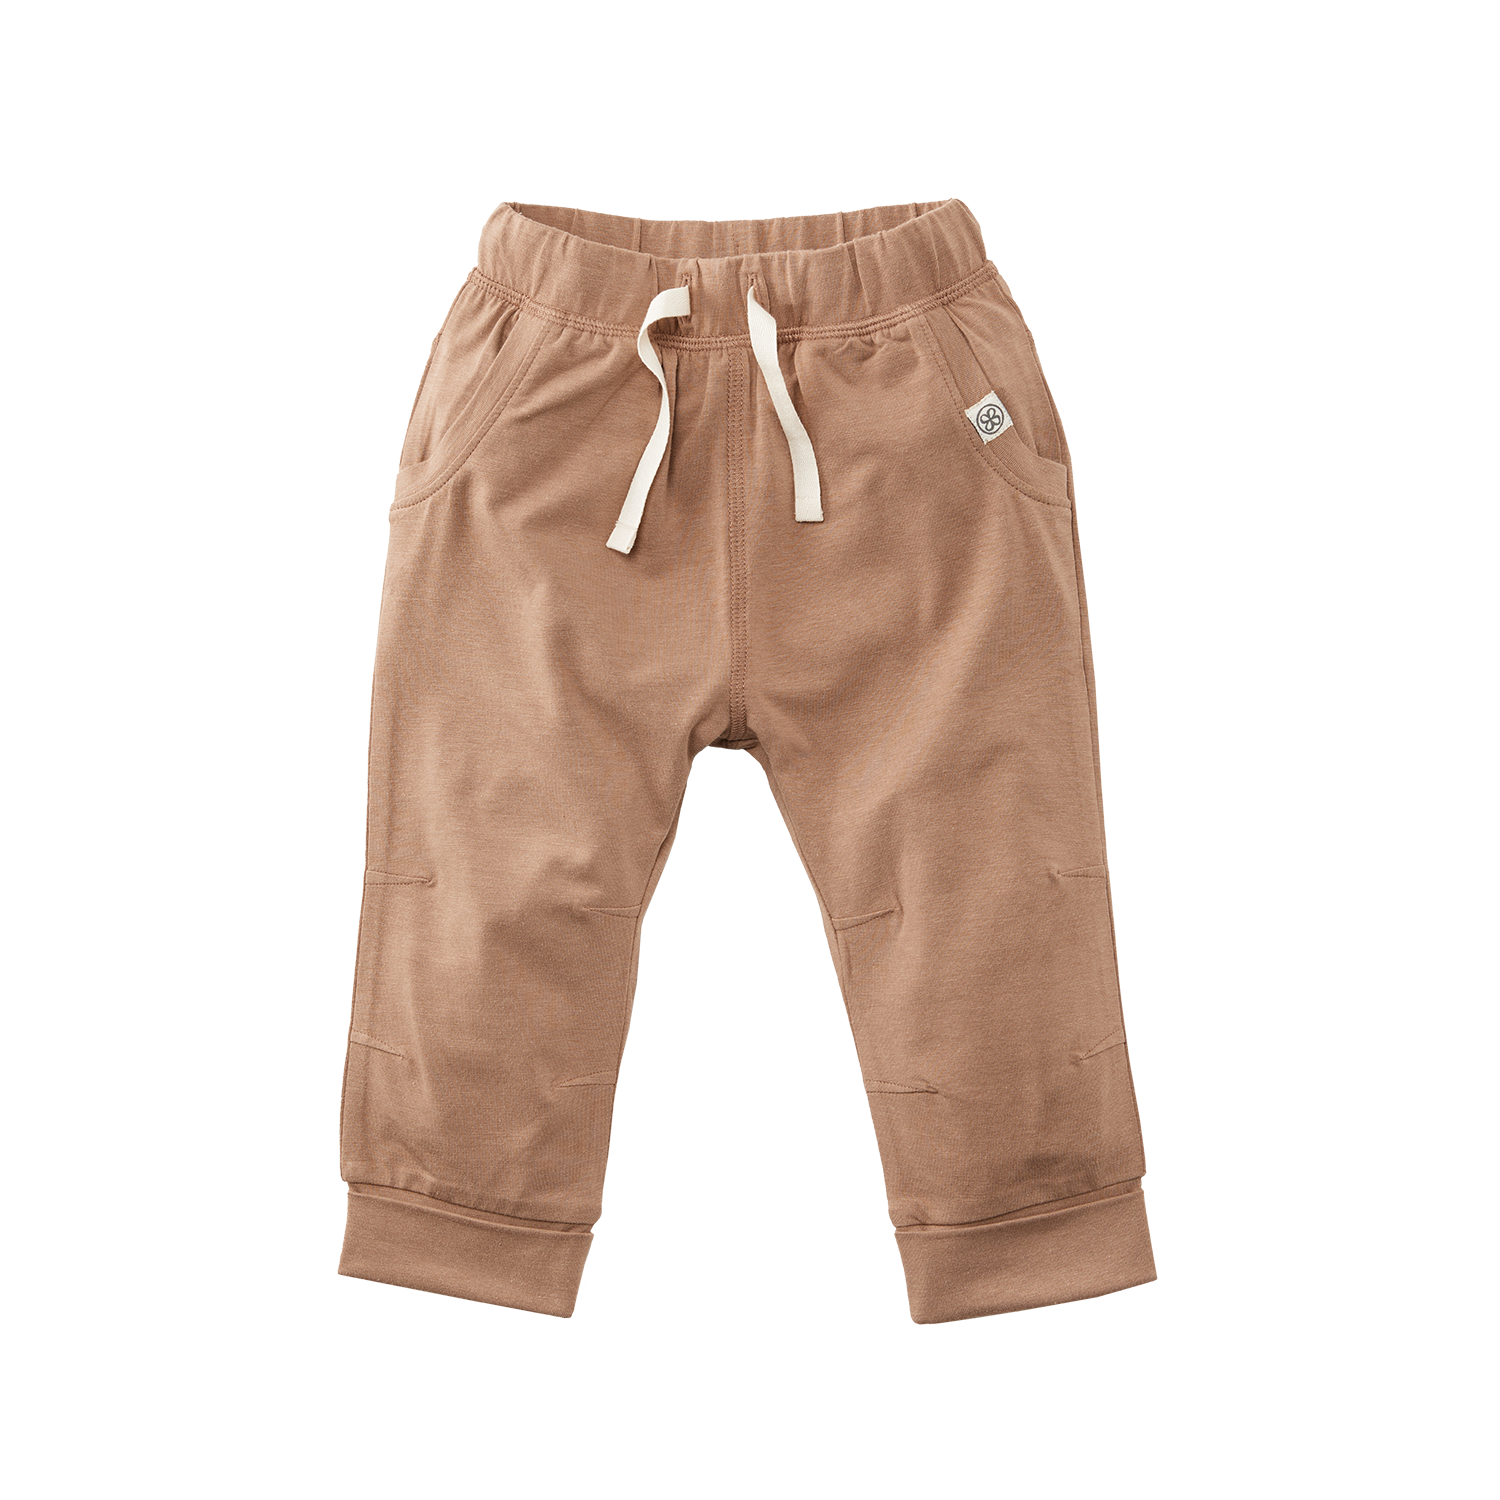 Hose / Jogginghose mit UV-Schutz (UPF 50+) Peanut Brown / braun (Gr. 18-24 Monate)